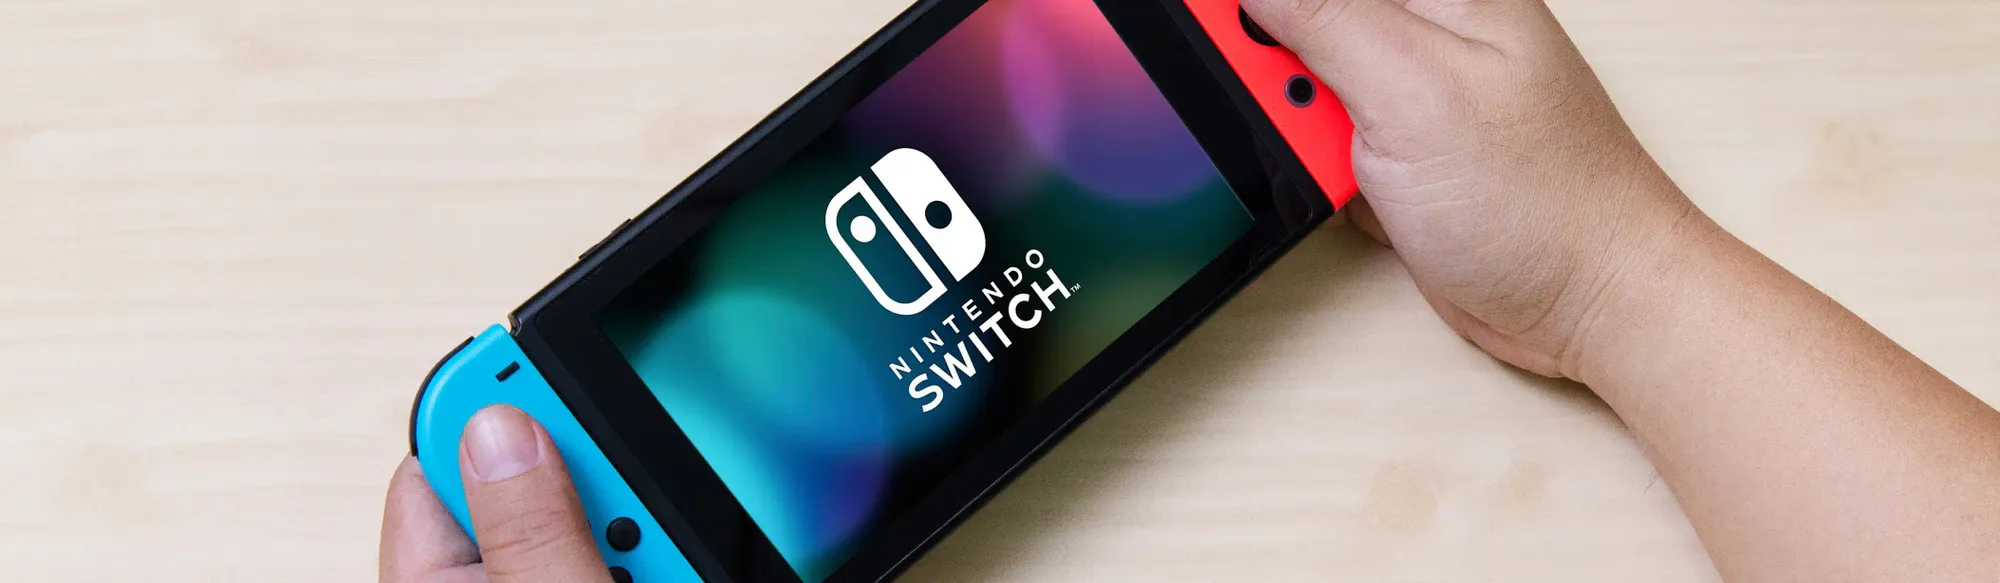 Capa do post: Nintendo Switch usado? Riscos e cuidados na hora de comprar barato